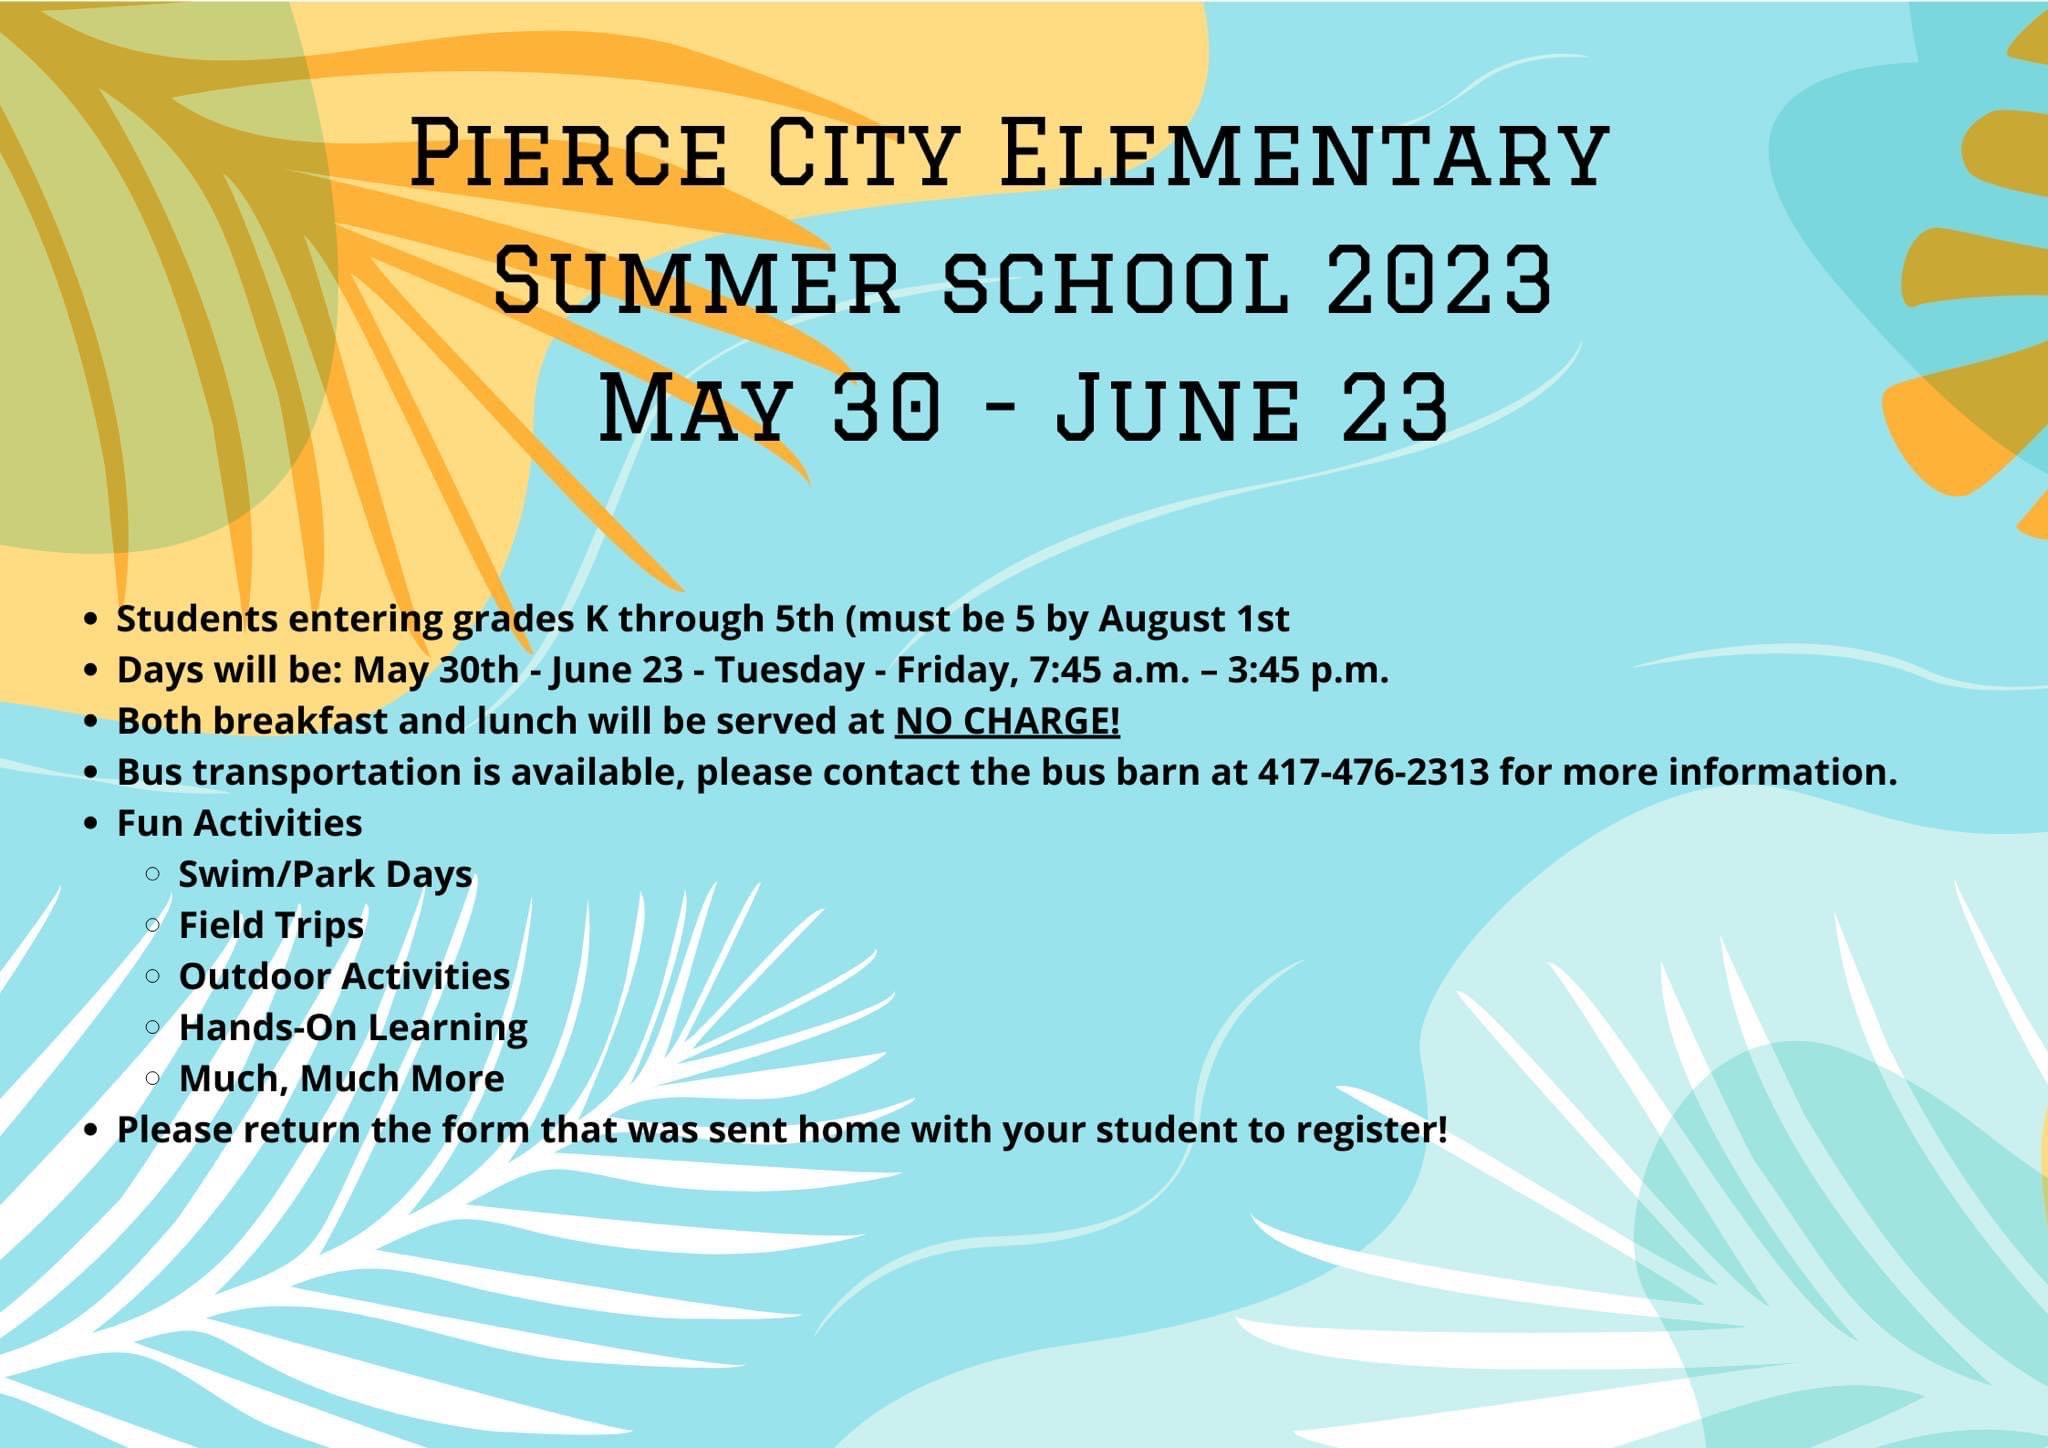 Elementary summer school flyer.  May 30th- June 23rd.